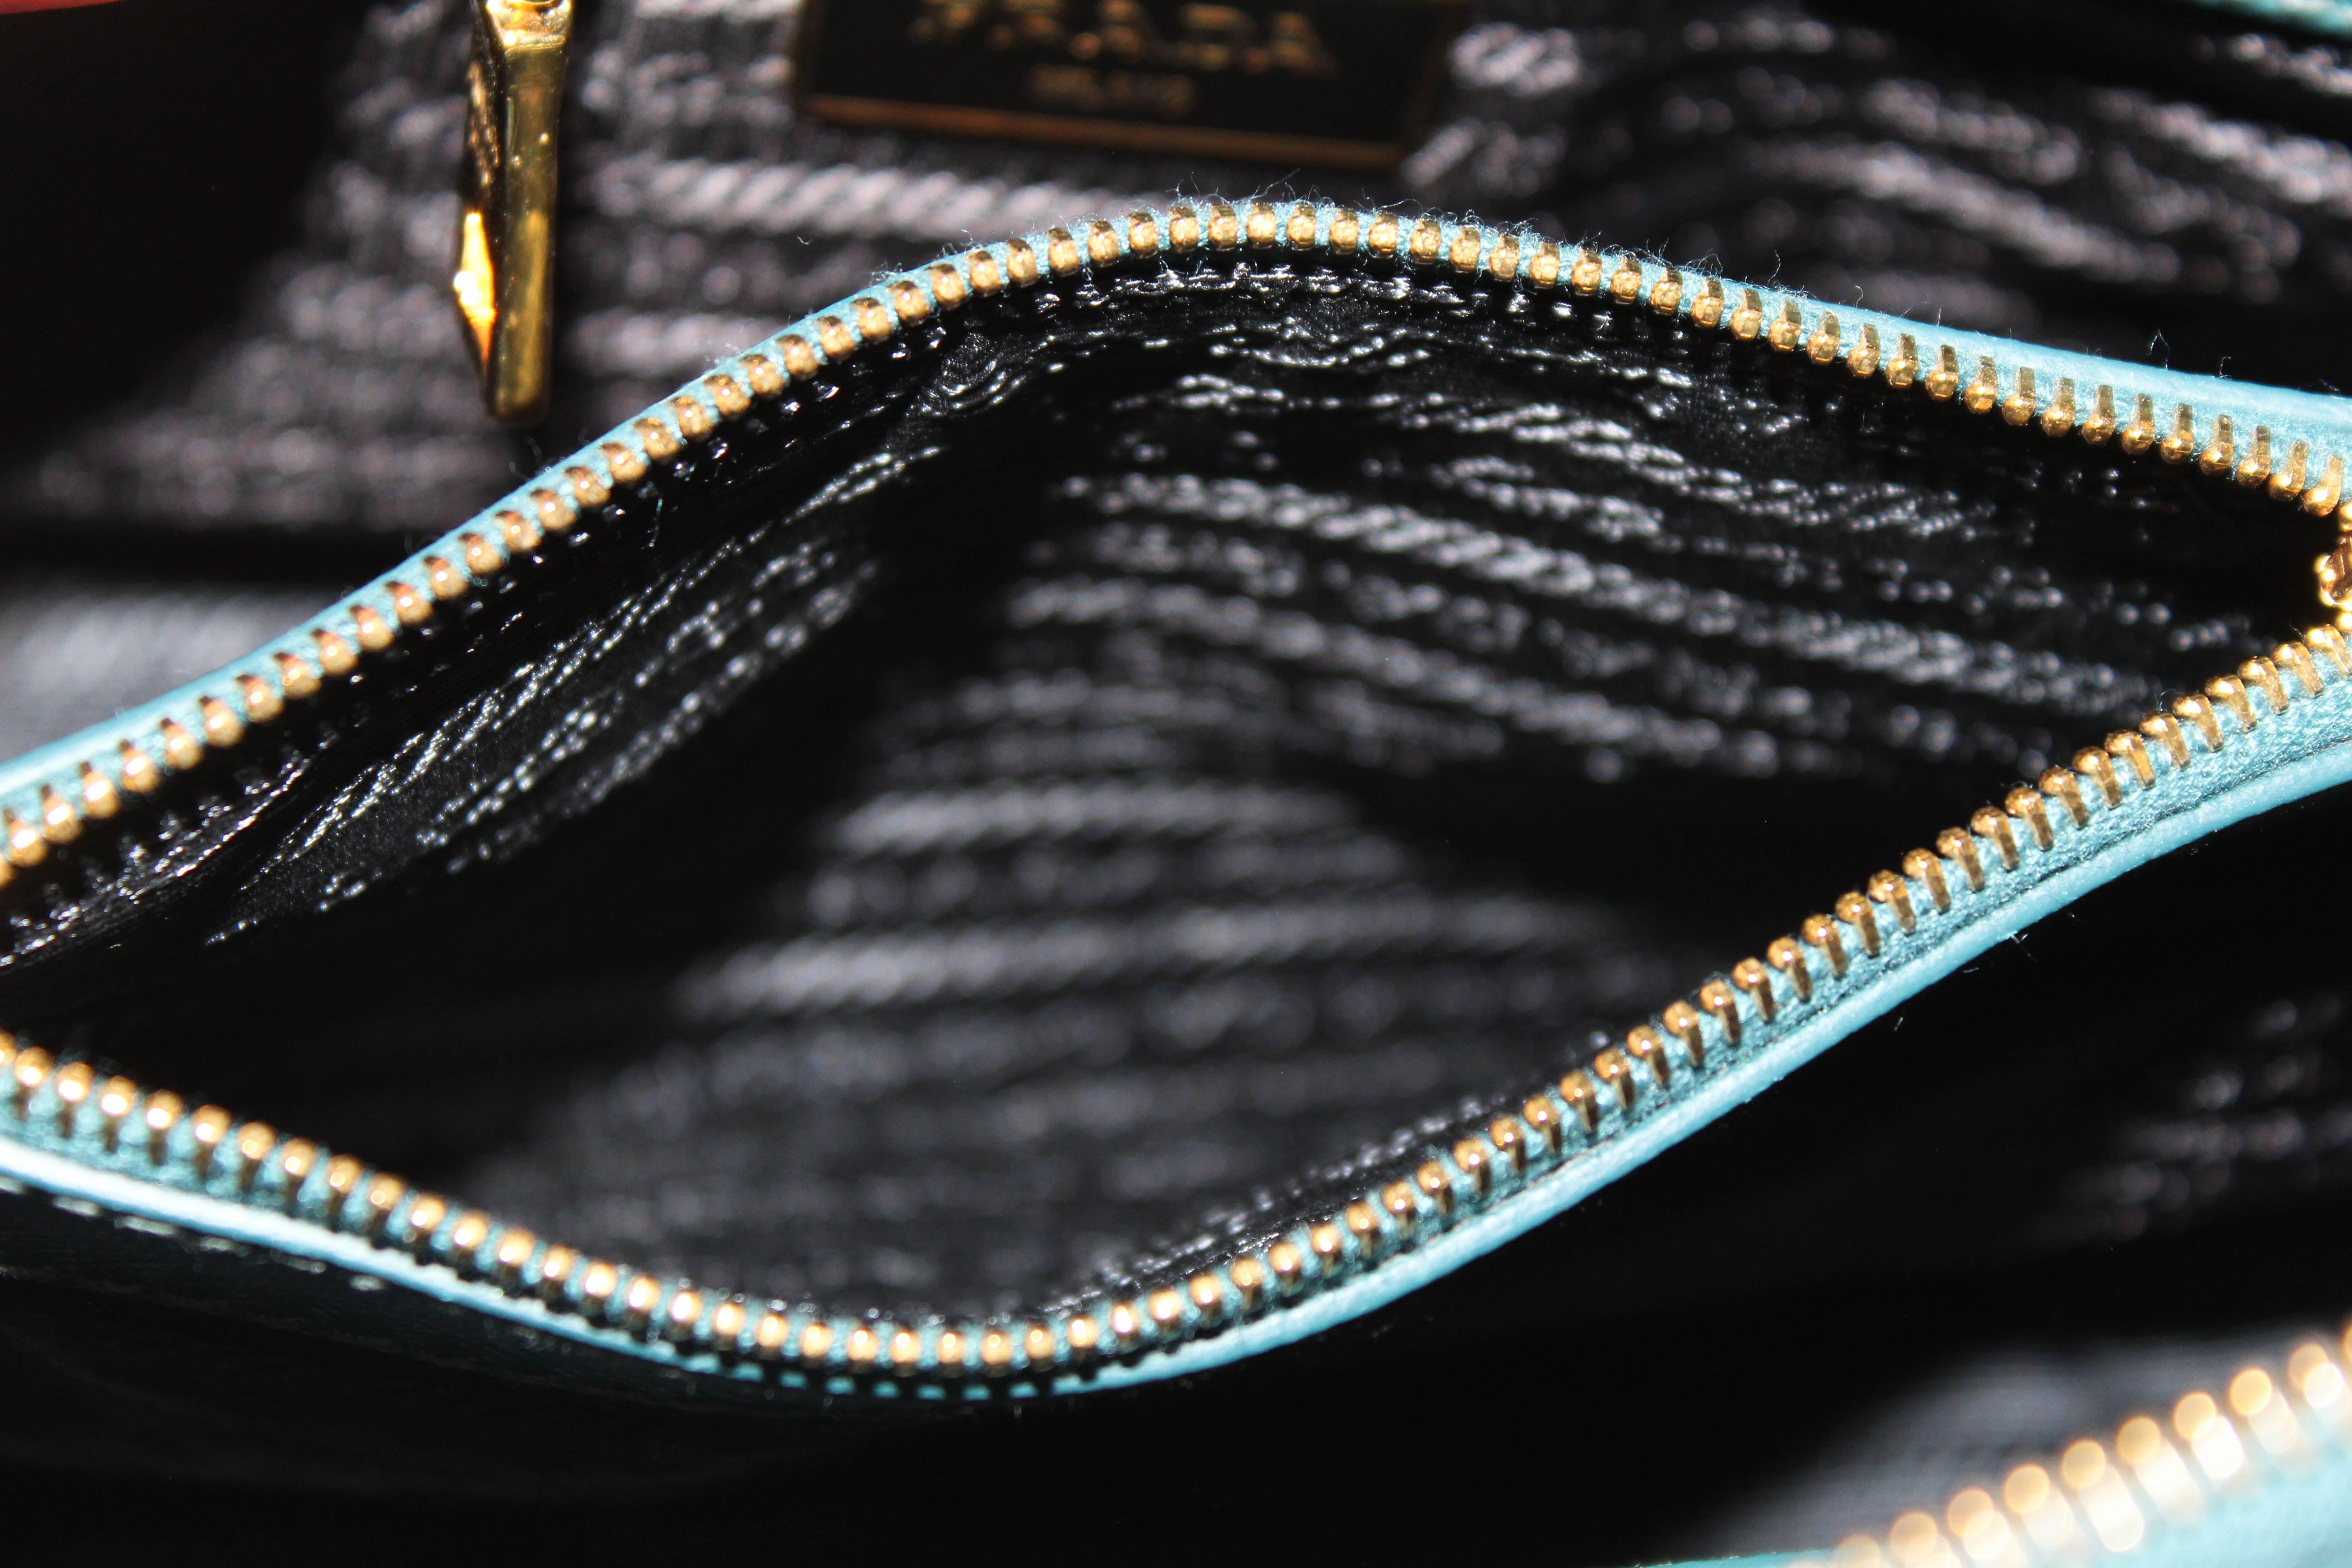 Promenade bag in blue patent leather Prada - Second Hand / Used